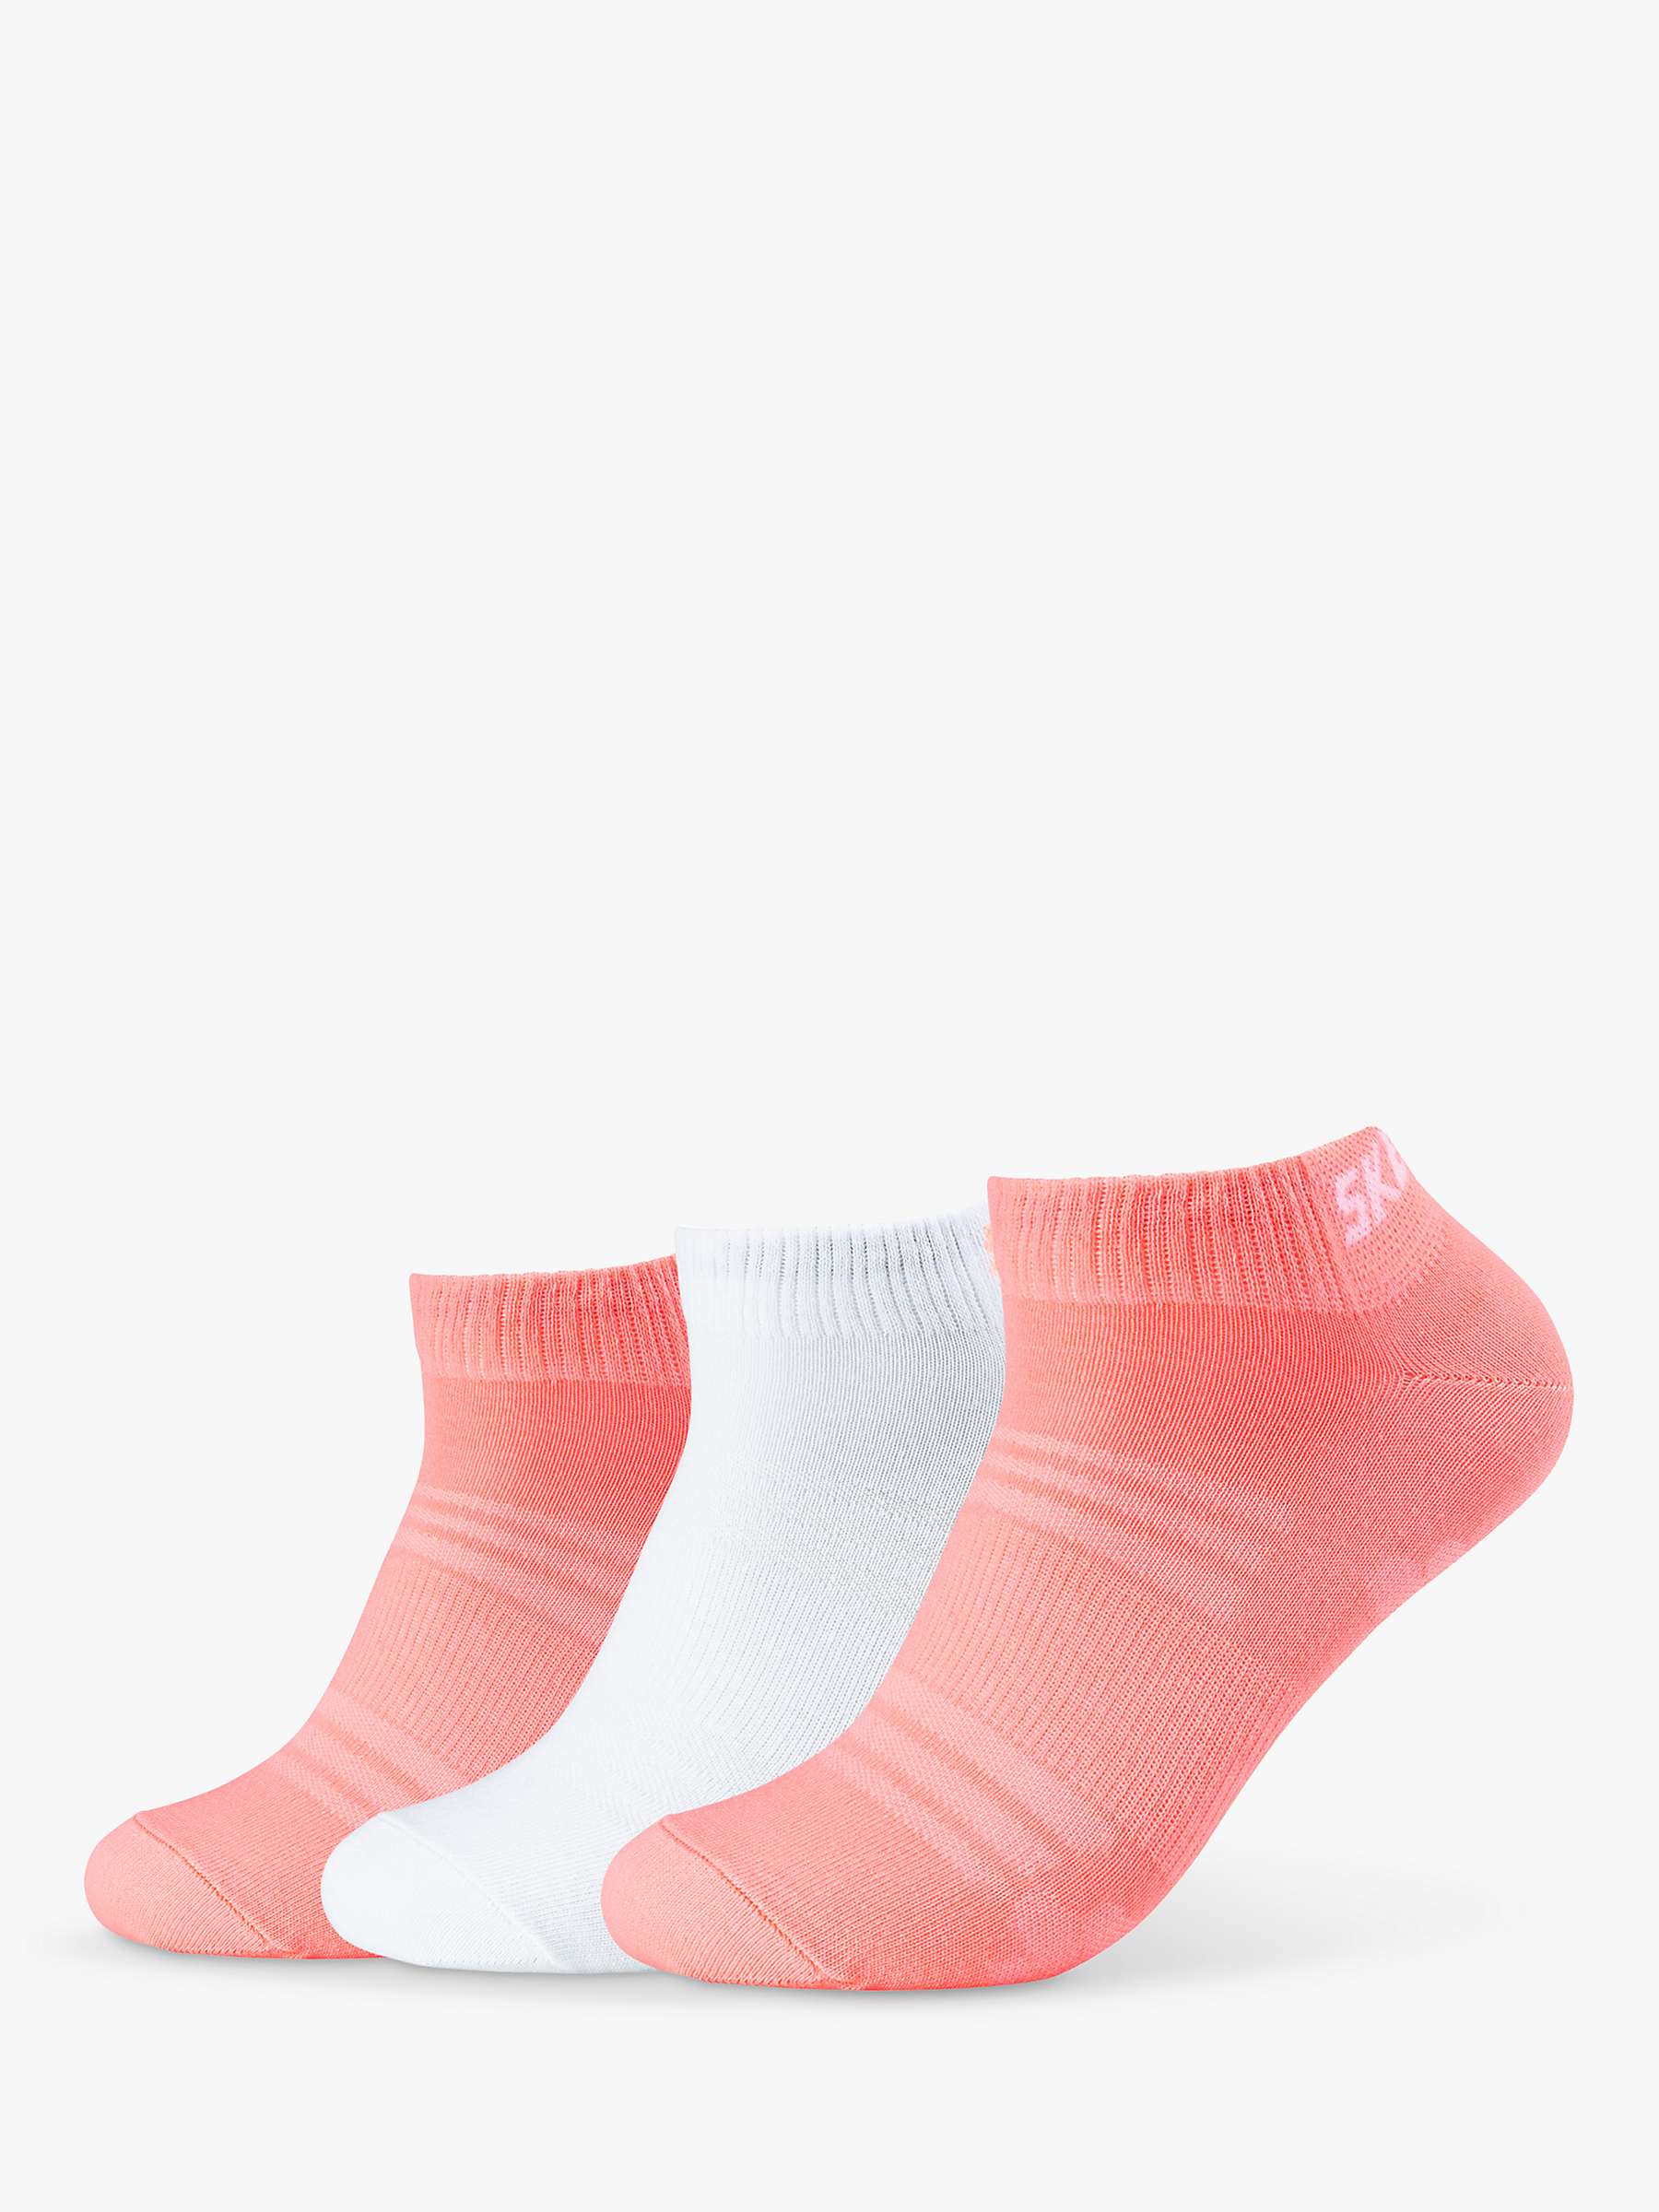 Buy Skechers Mesh Ventilation Trainer Socks, Pack of 3 Online at johnlewis.com